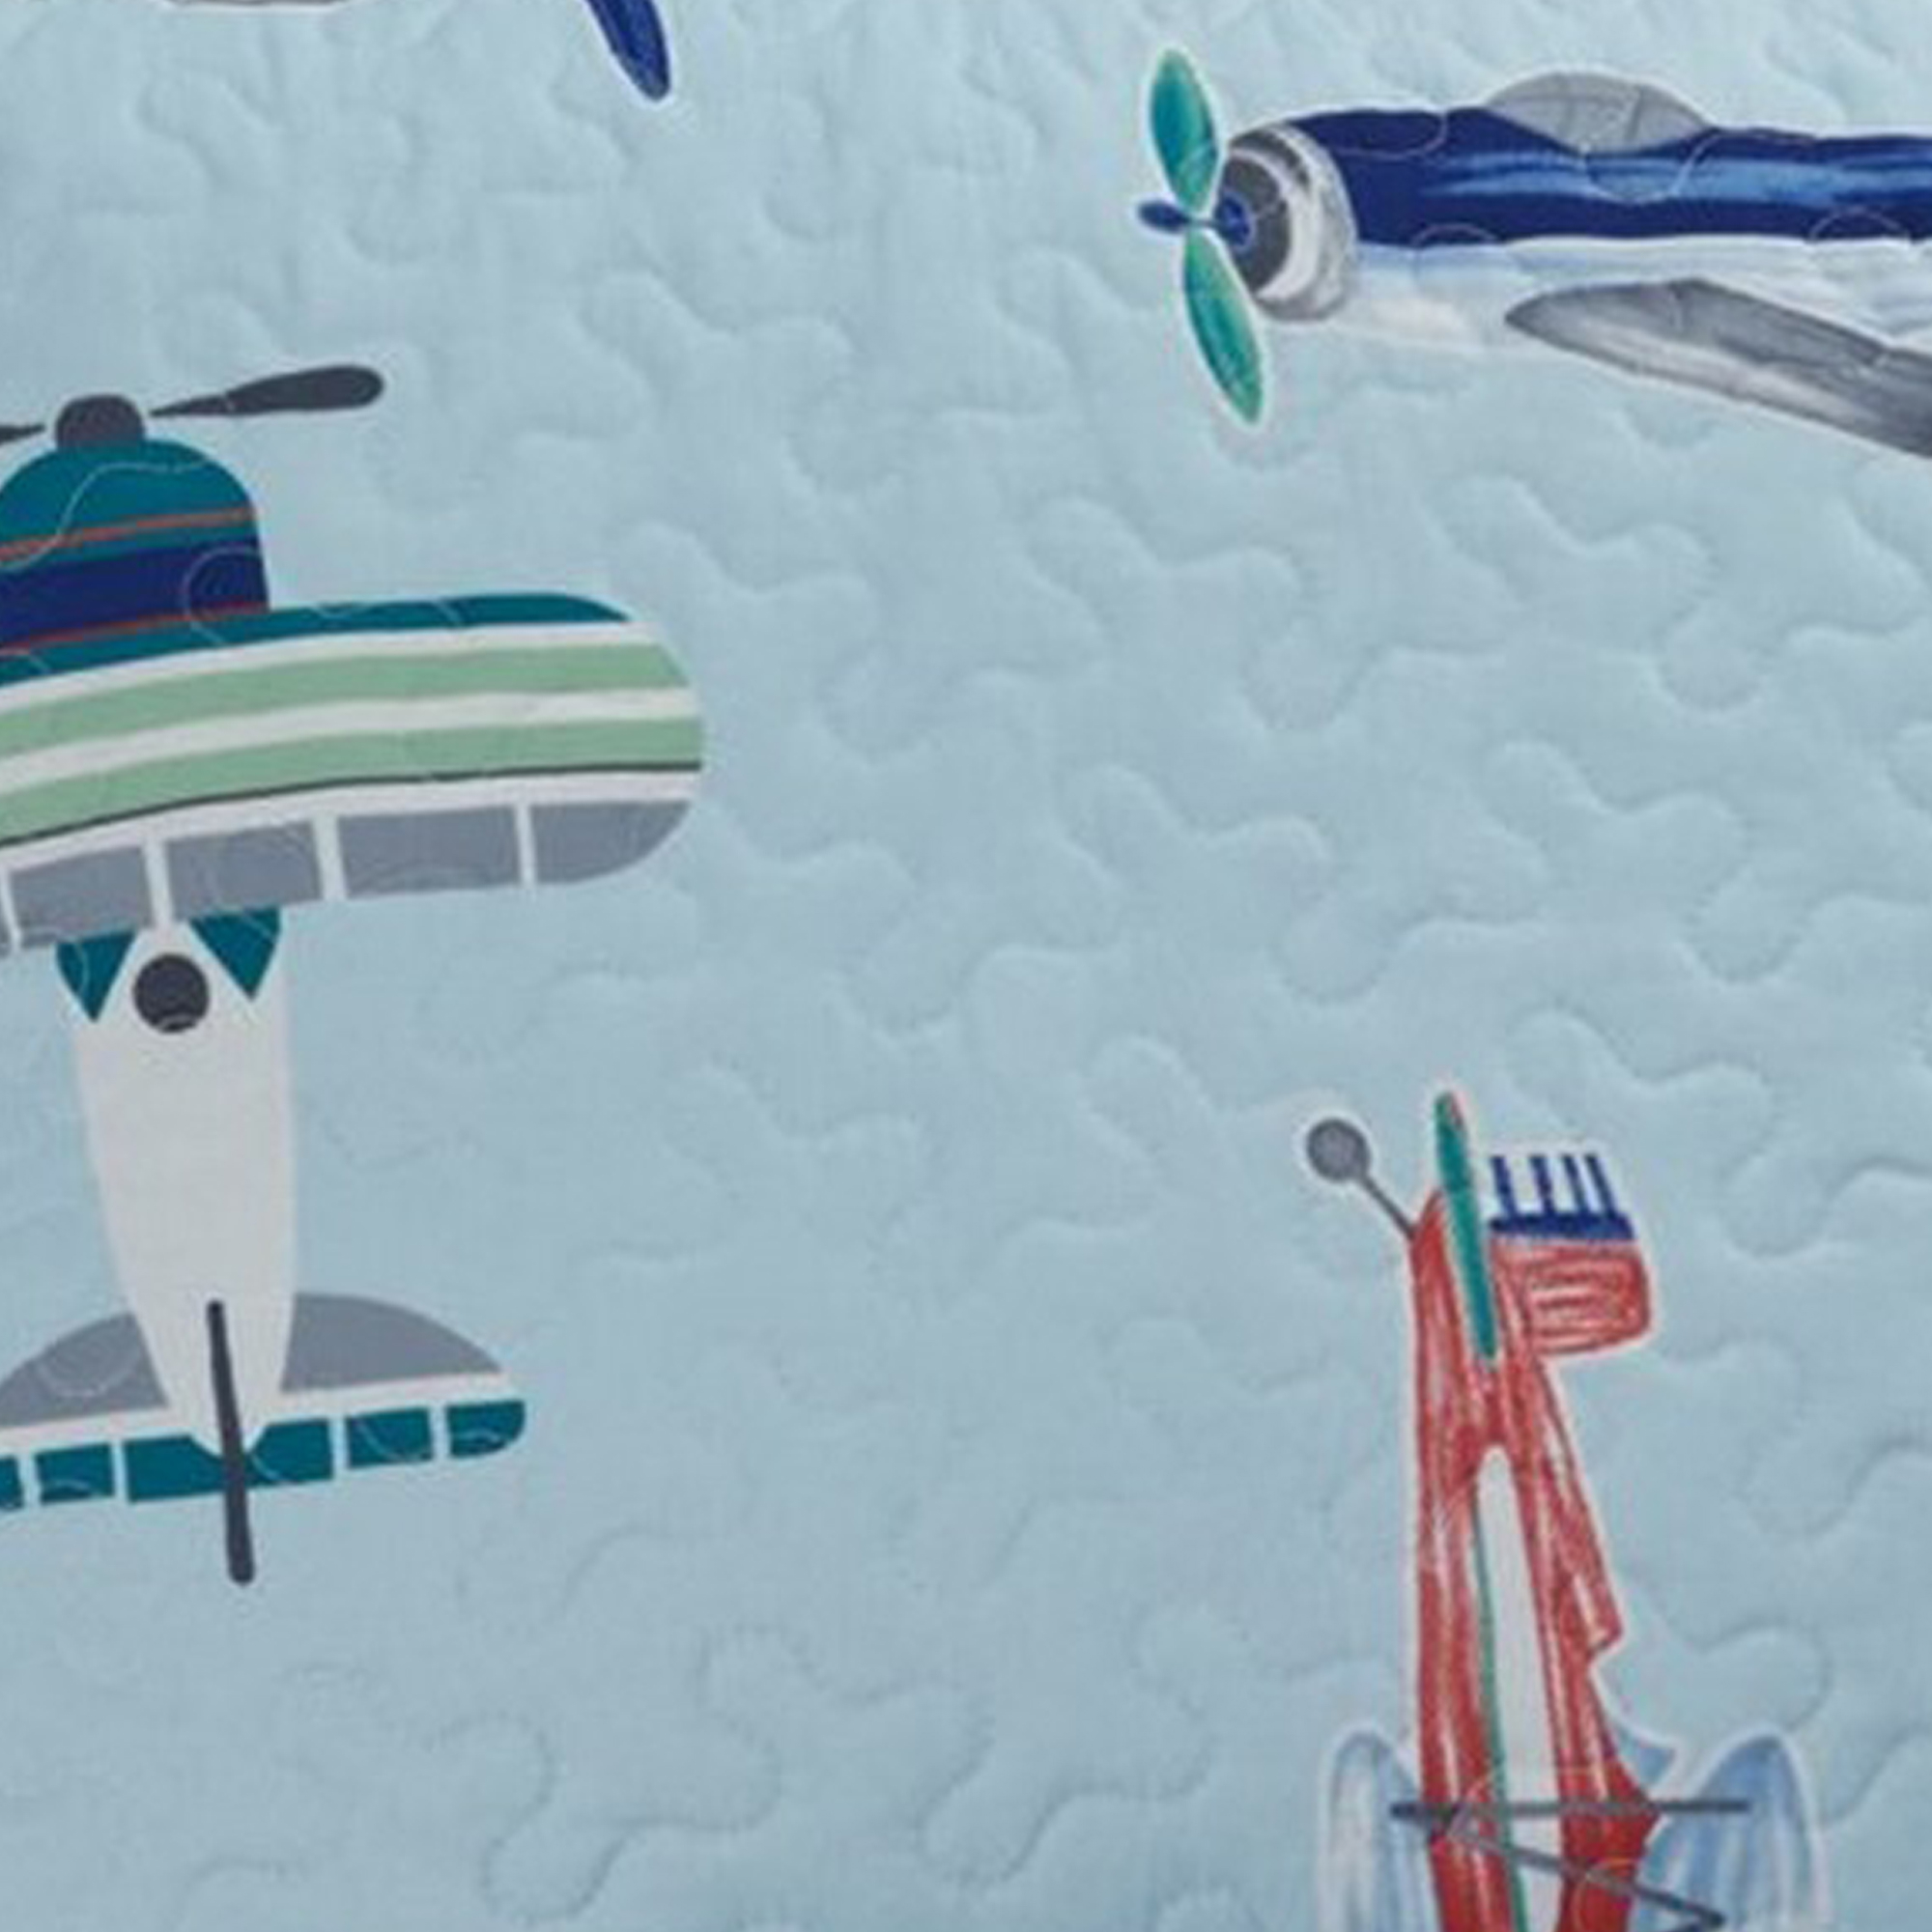 Aircraft Print Fabric Upholstered 2 Piece Full Quilt Set, Multicolor- Saltoro Sherpi